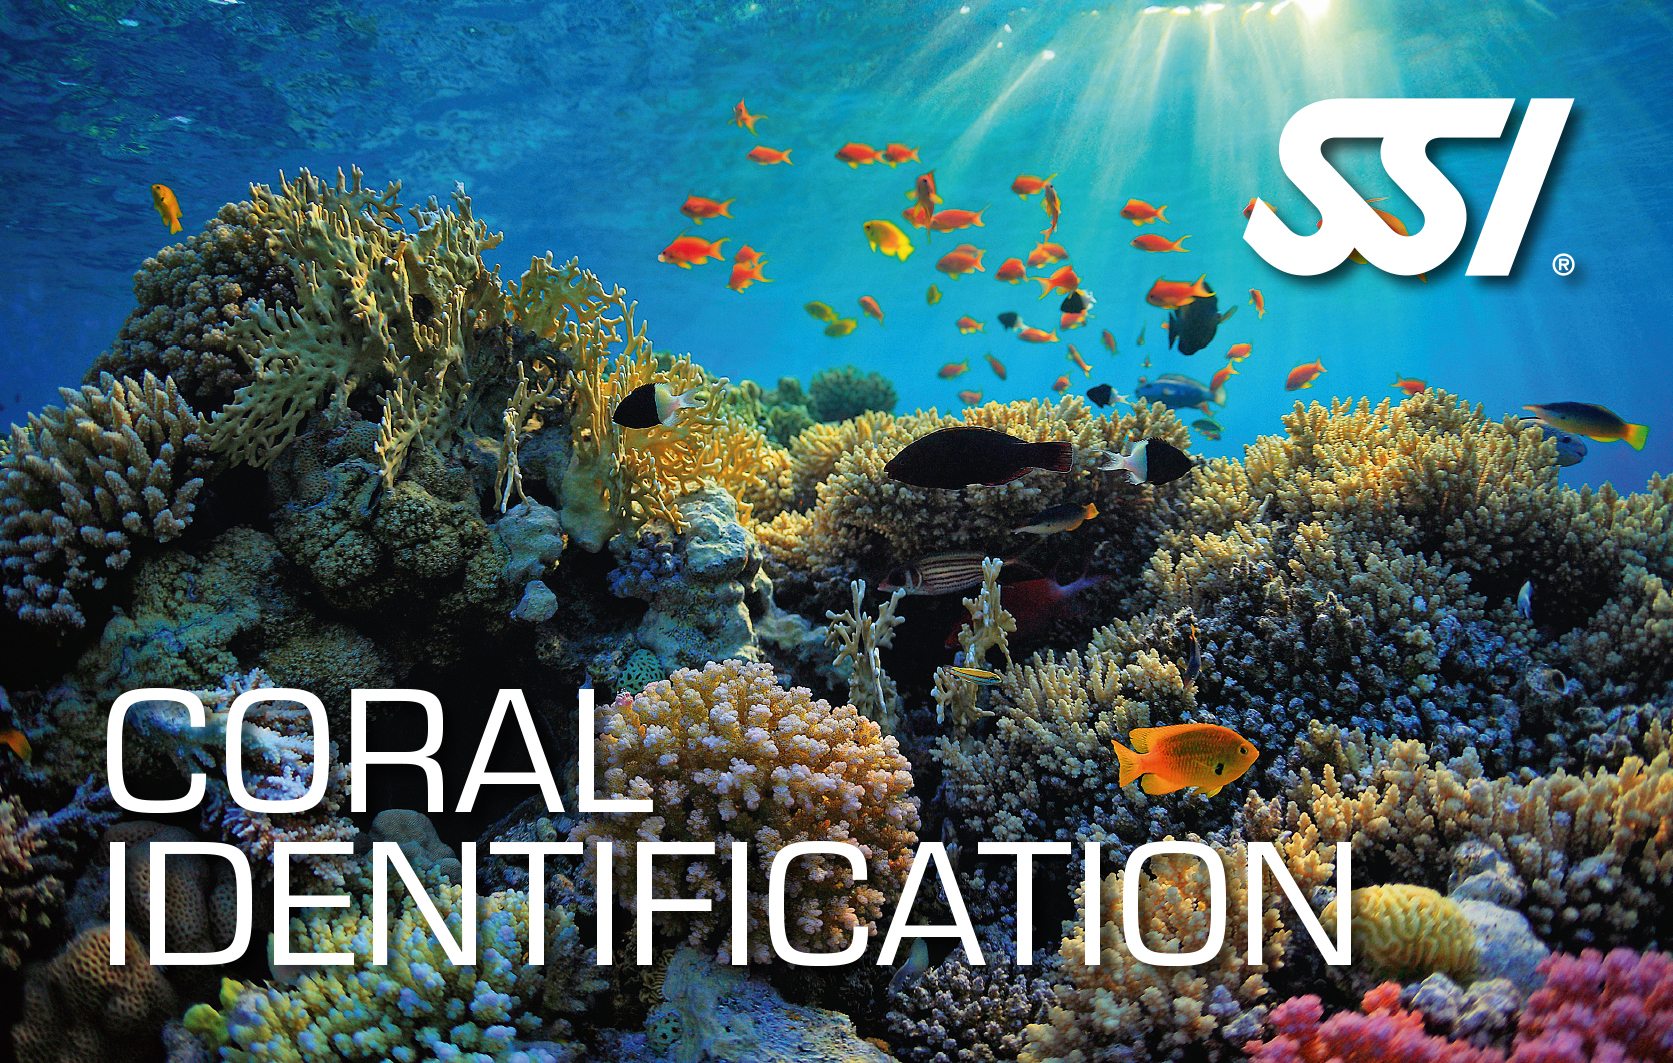 SSI Coral Identification Course | SSI Coral Identification | Coral Identification | Deep Blue Scuba | Scuba Course